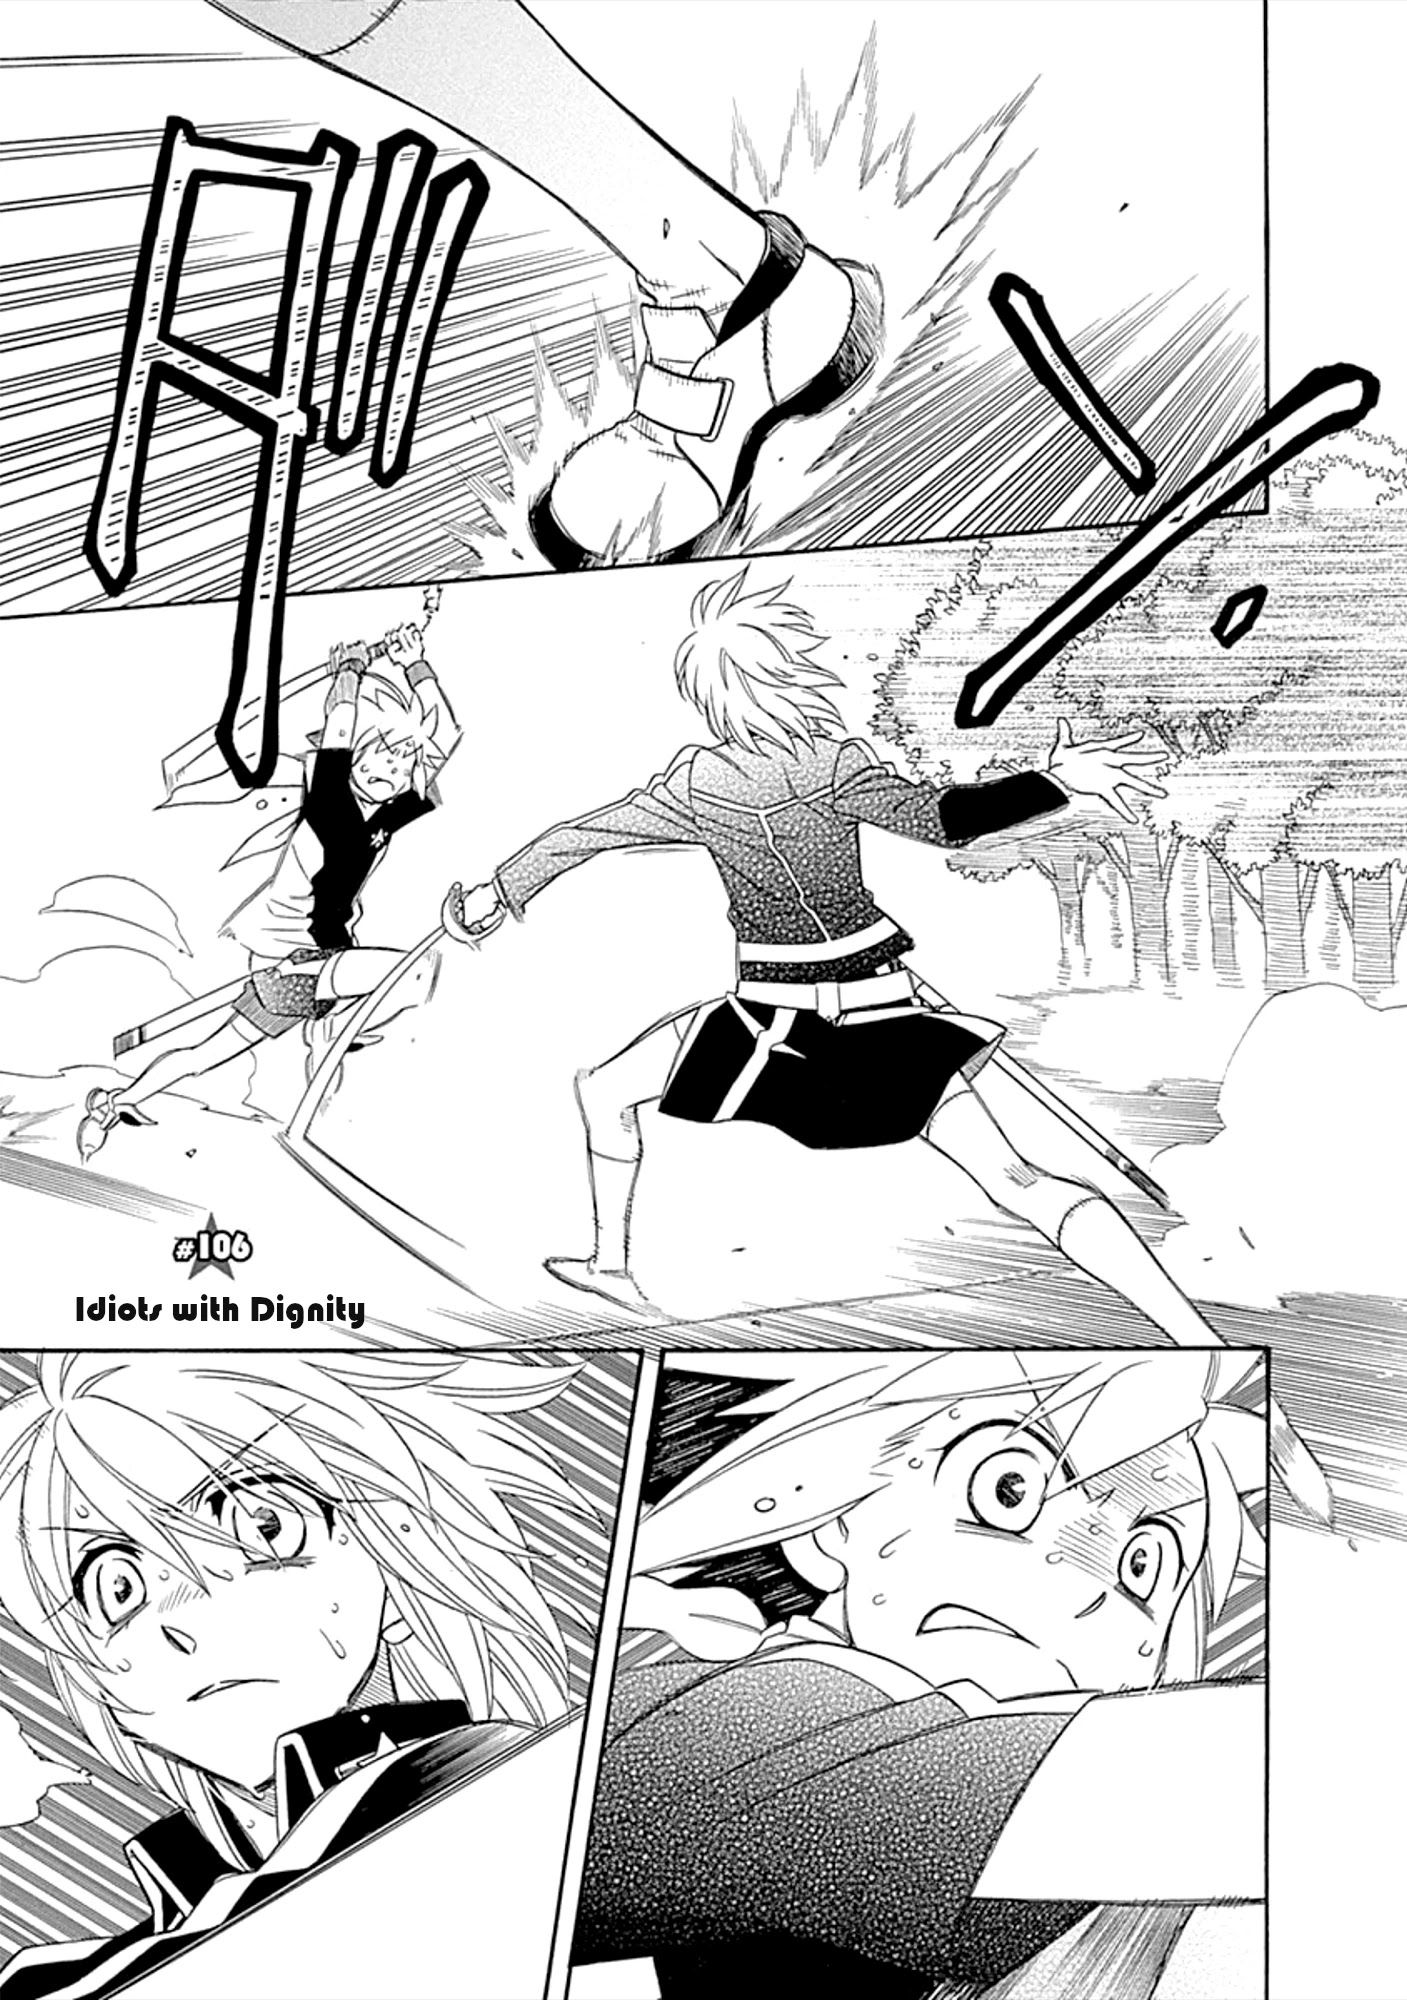 Hayate X Blade - Page 1